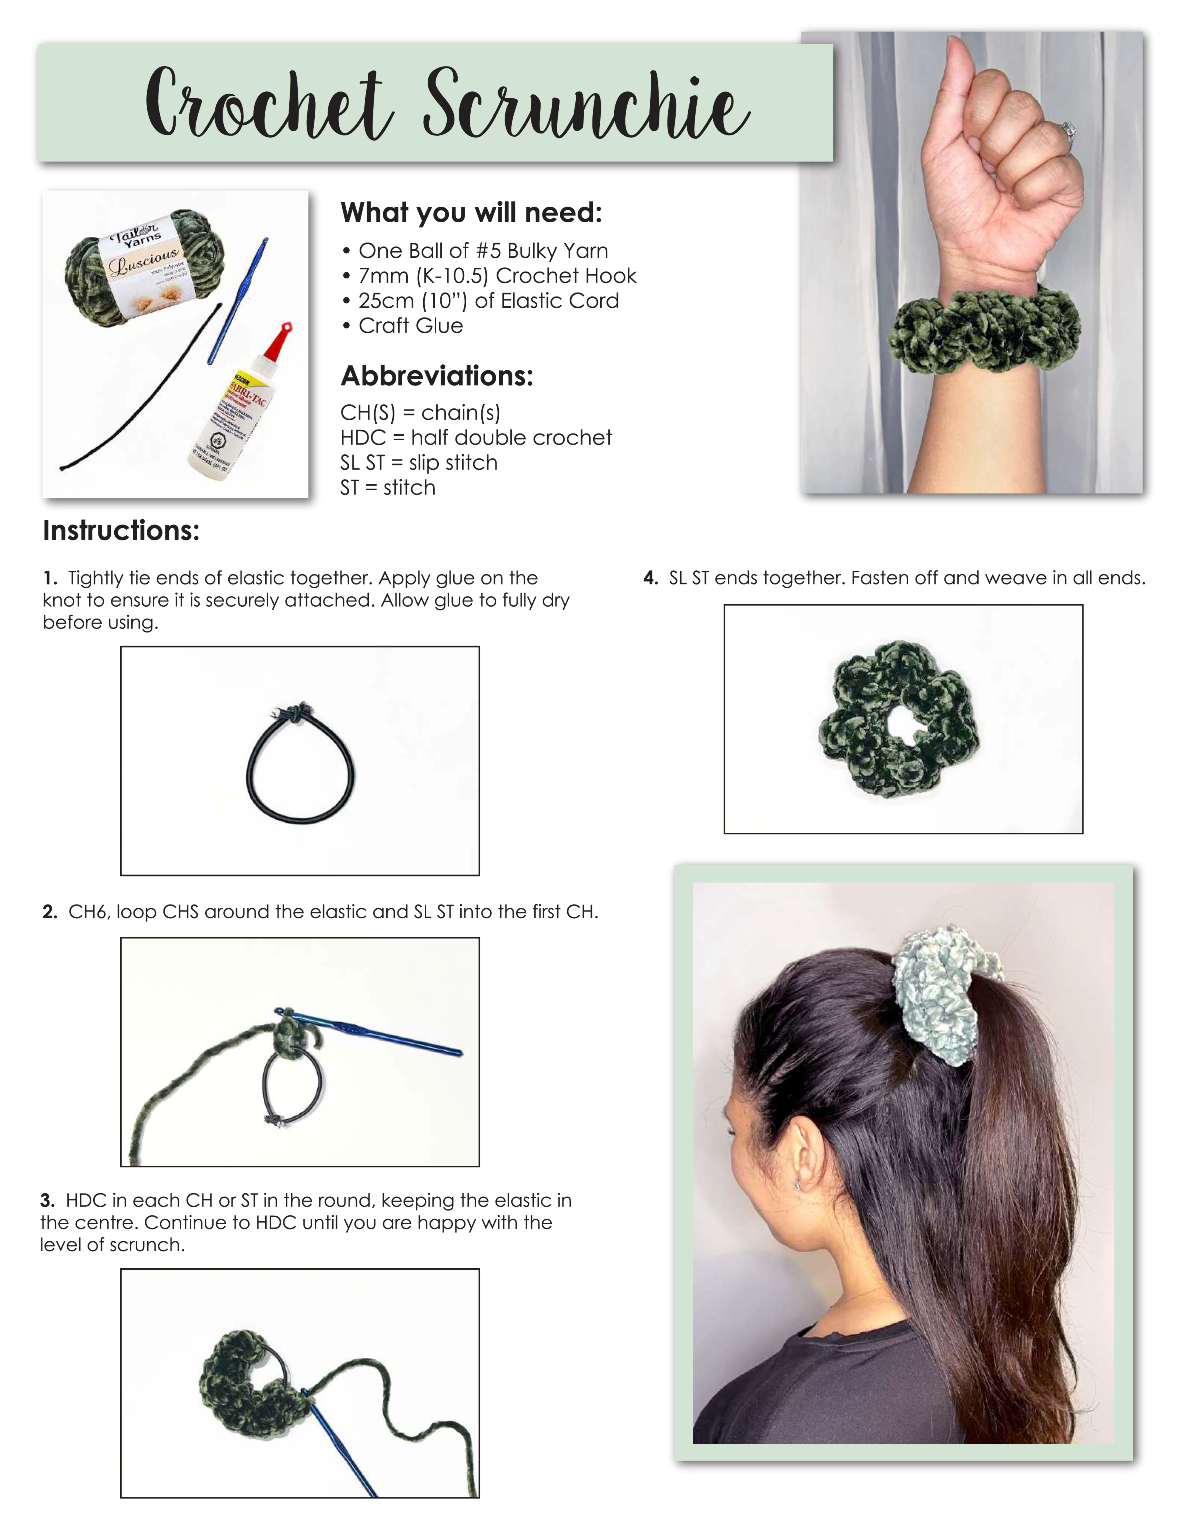 Steps to create your DIY mcrocket scrunchie